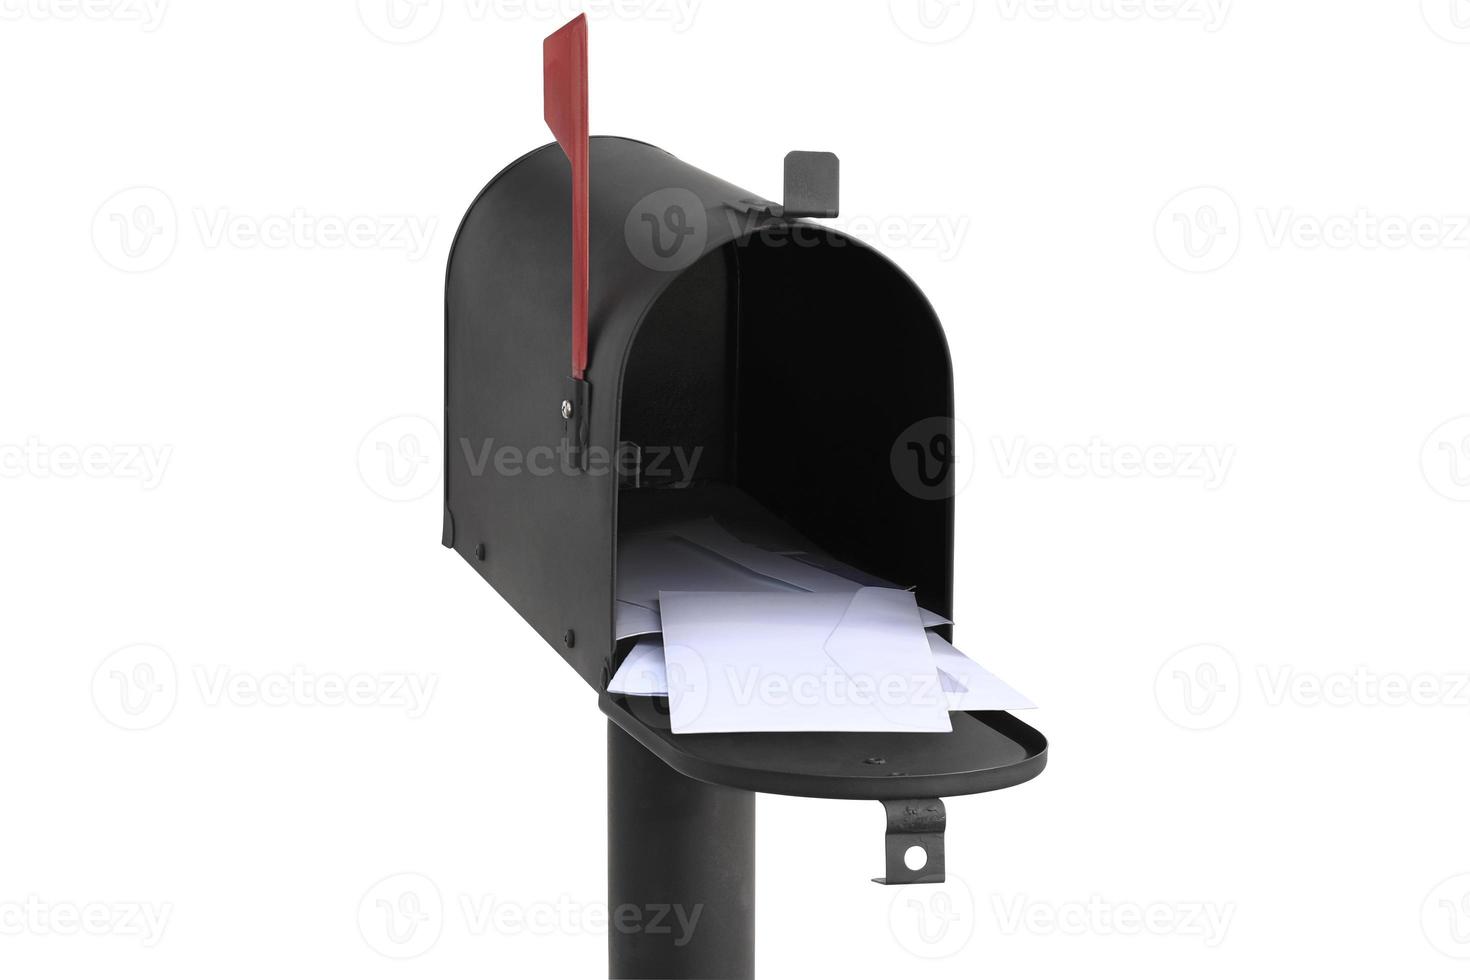 brevlåda isolerad på vit bakgrund foto